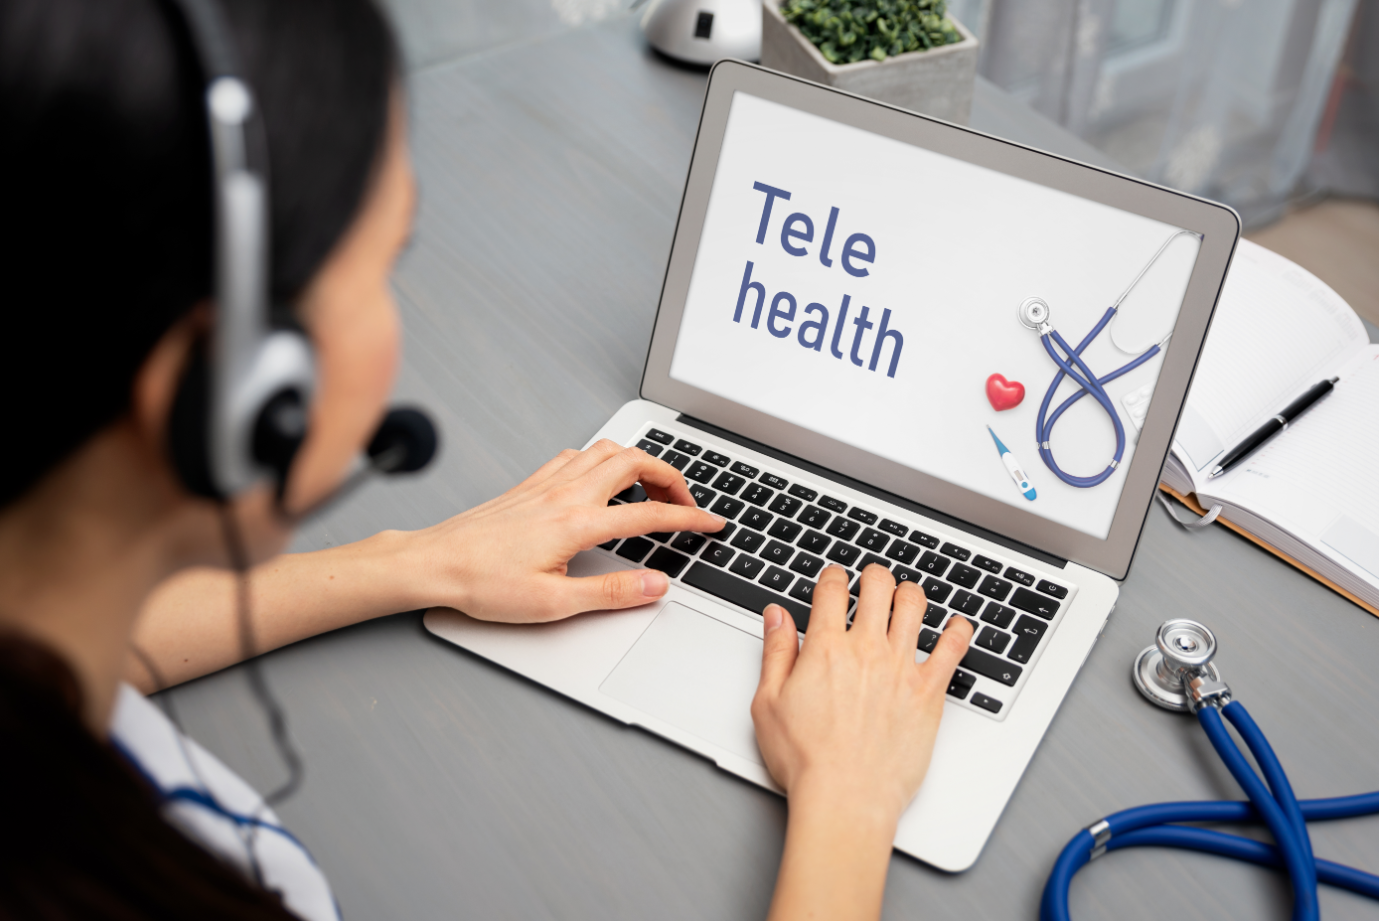 telemedicine vs. telehealth